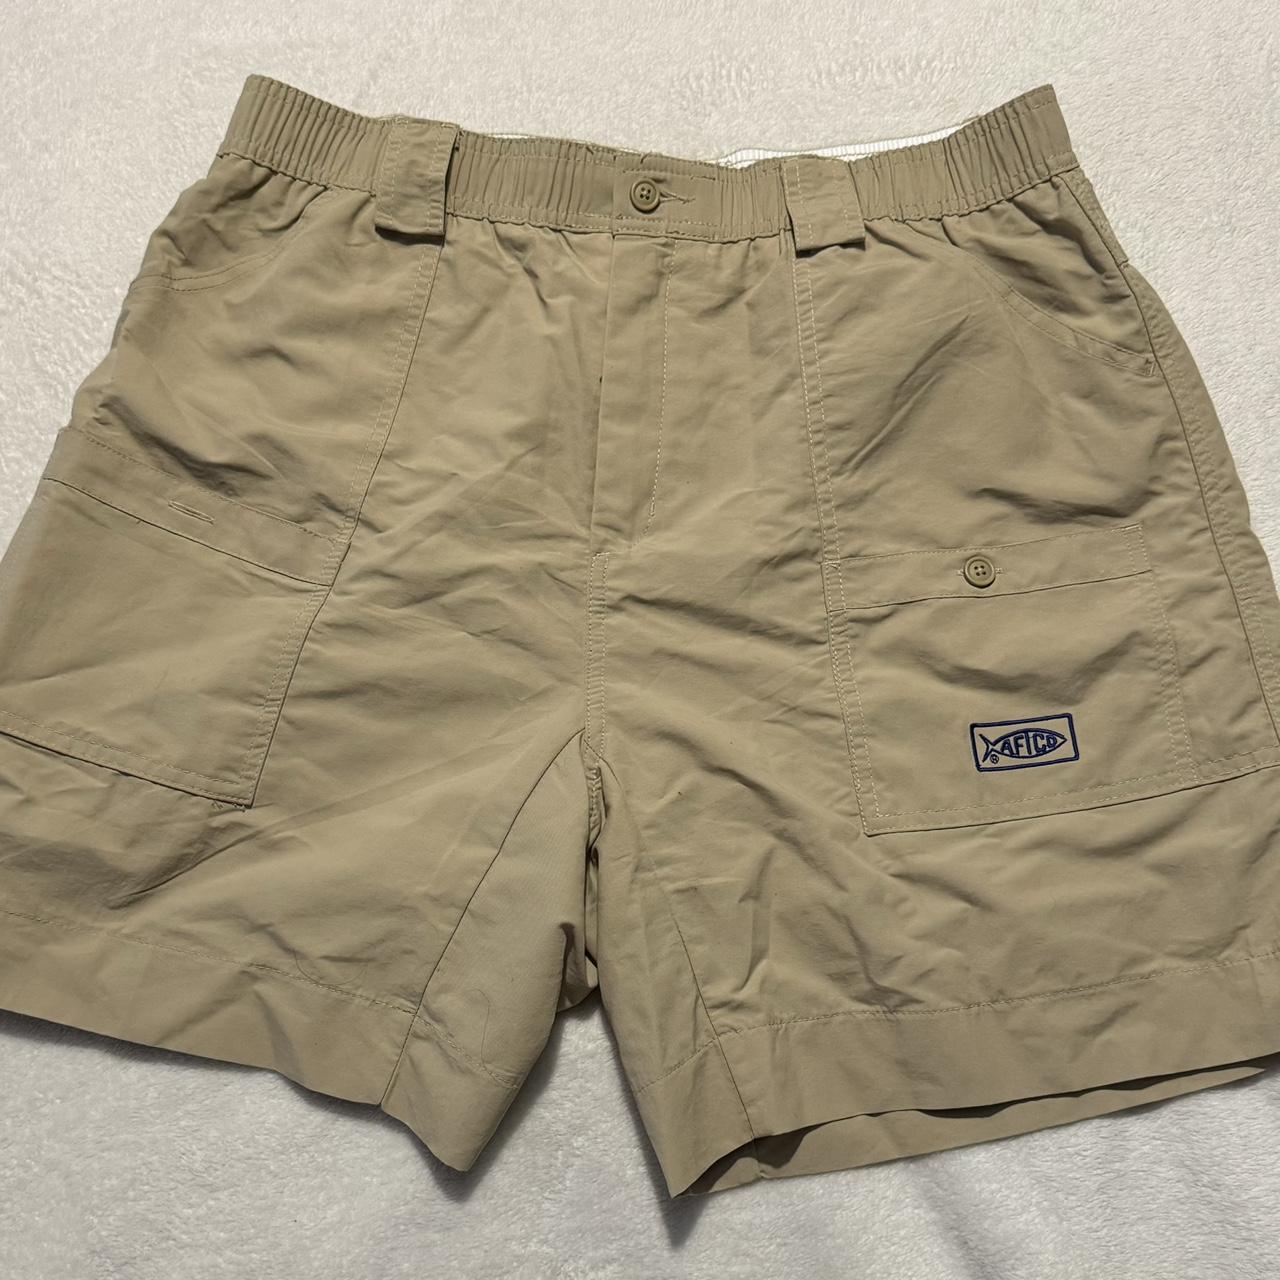 Men's Shorts - Tan - 38